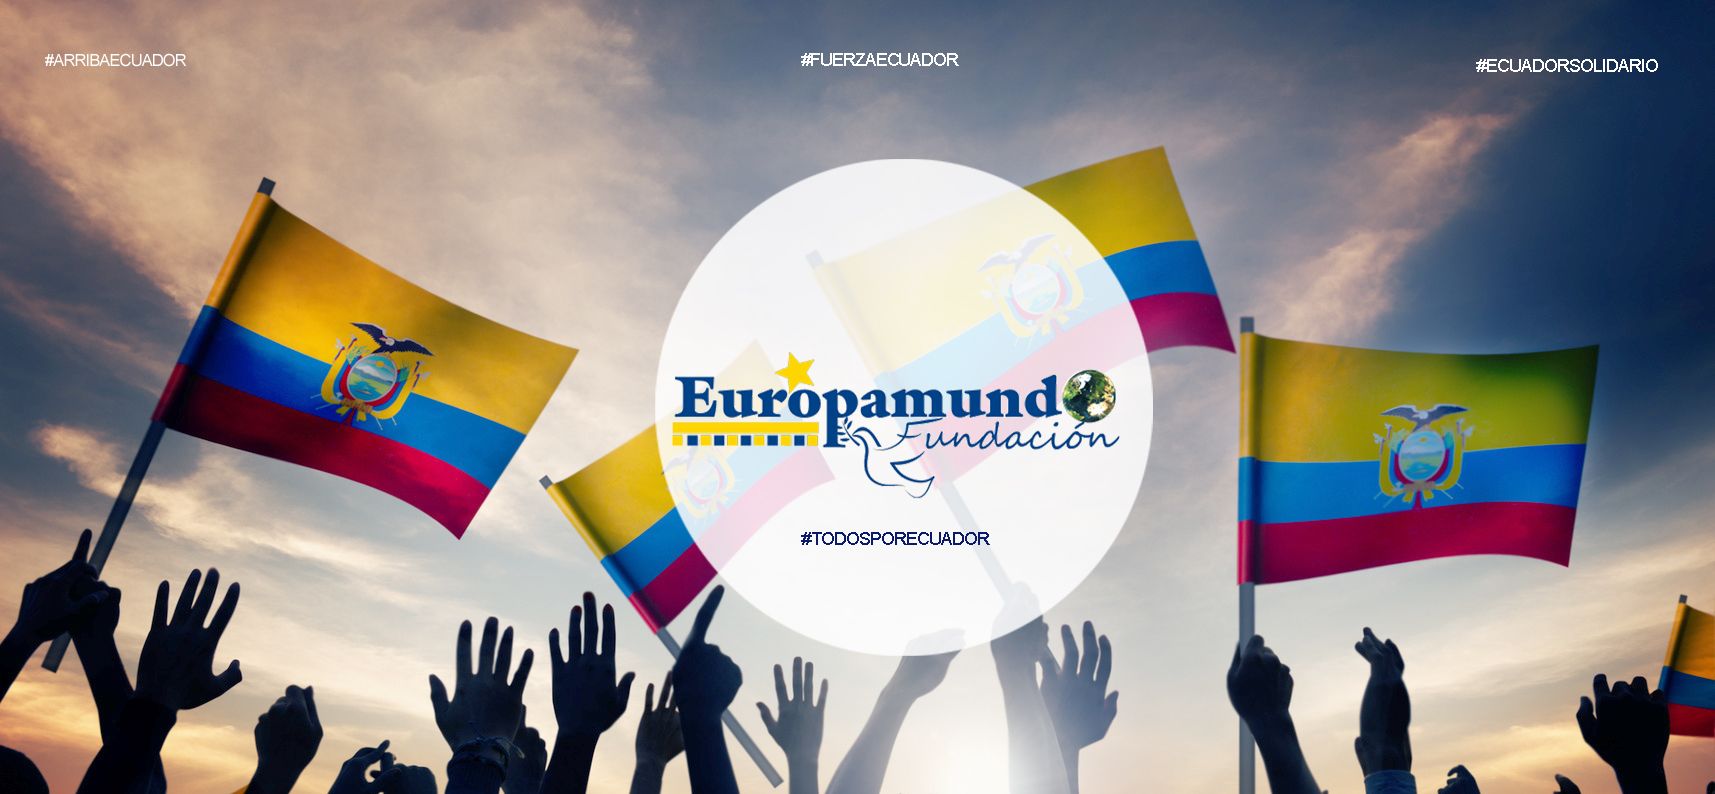 Todos somos Ecuador!